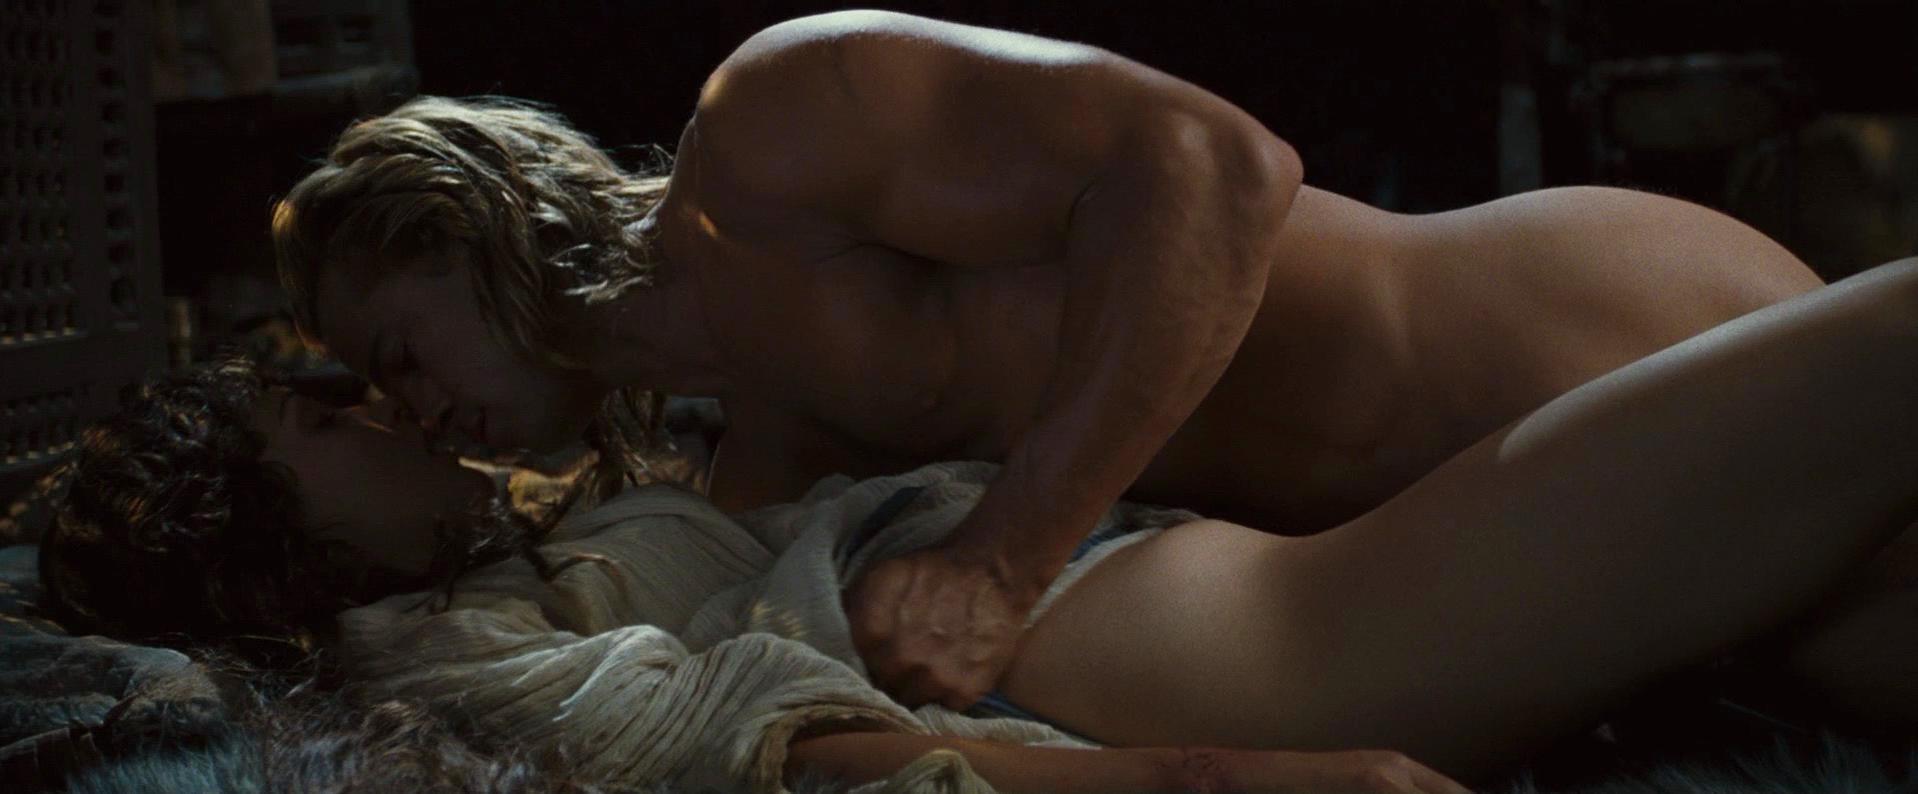 Sex scene troy movies